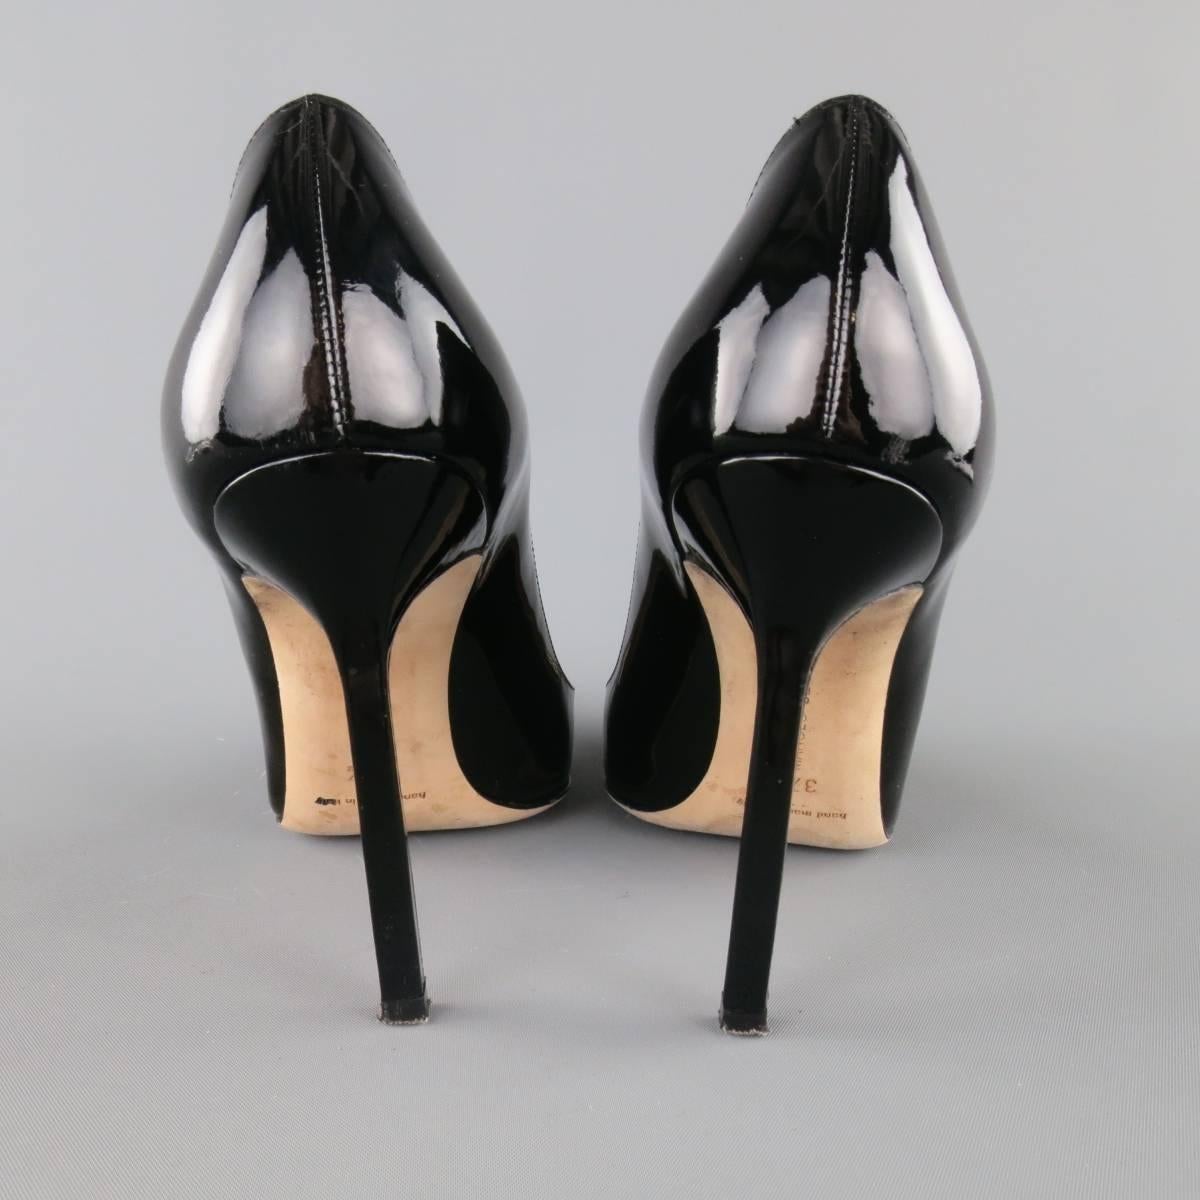 Women's MANOLO BLAHNIK Size 7.5 Black Patent Leather Classic Pointed Toe Stiletto Pumps